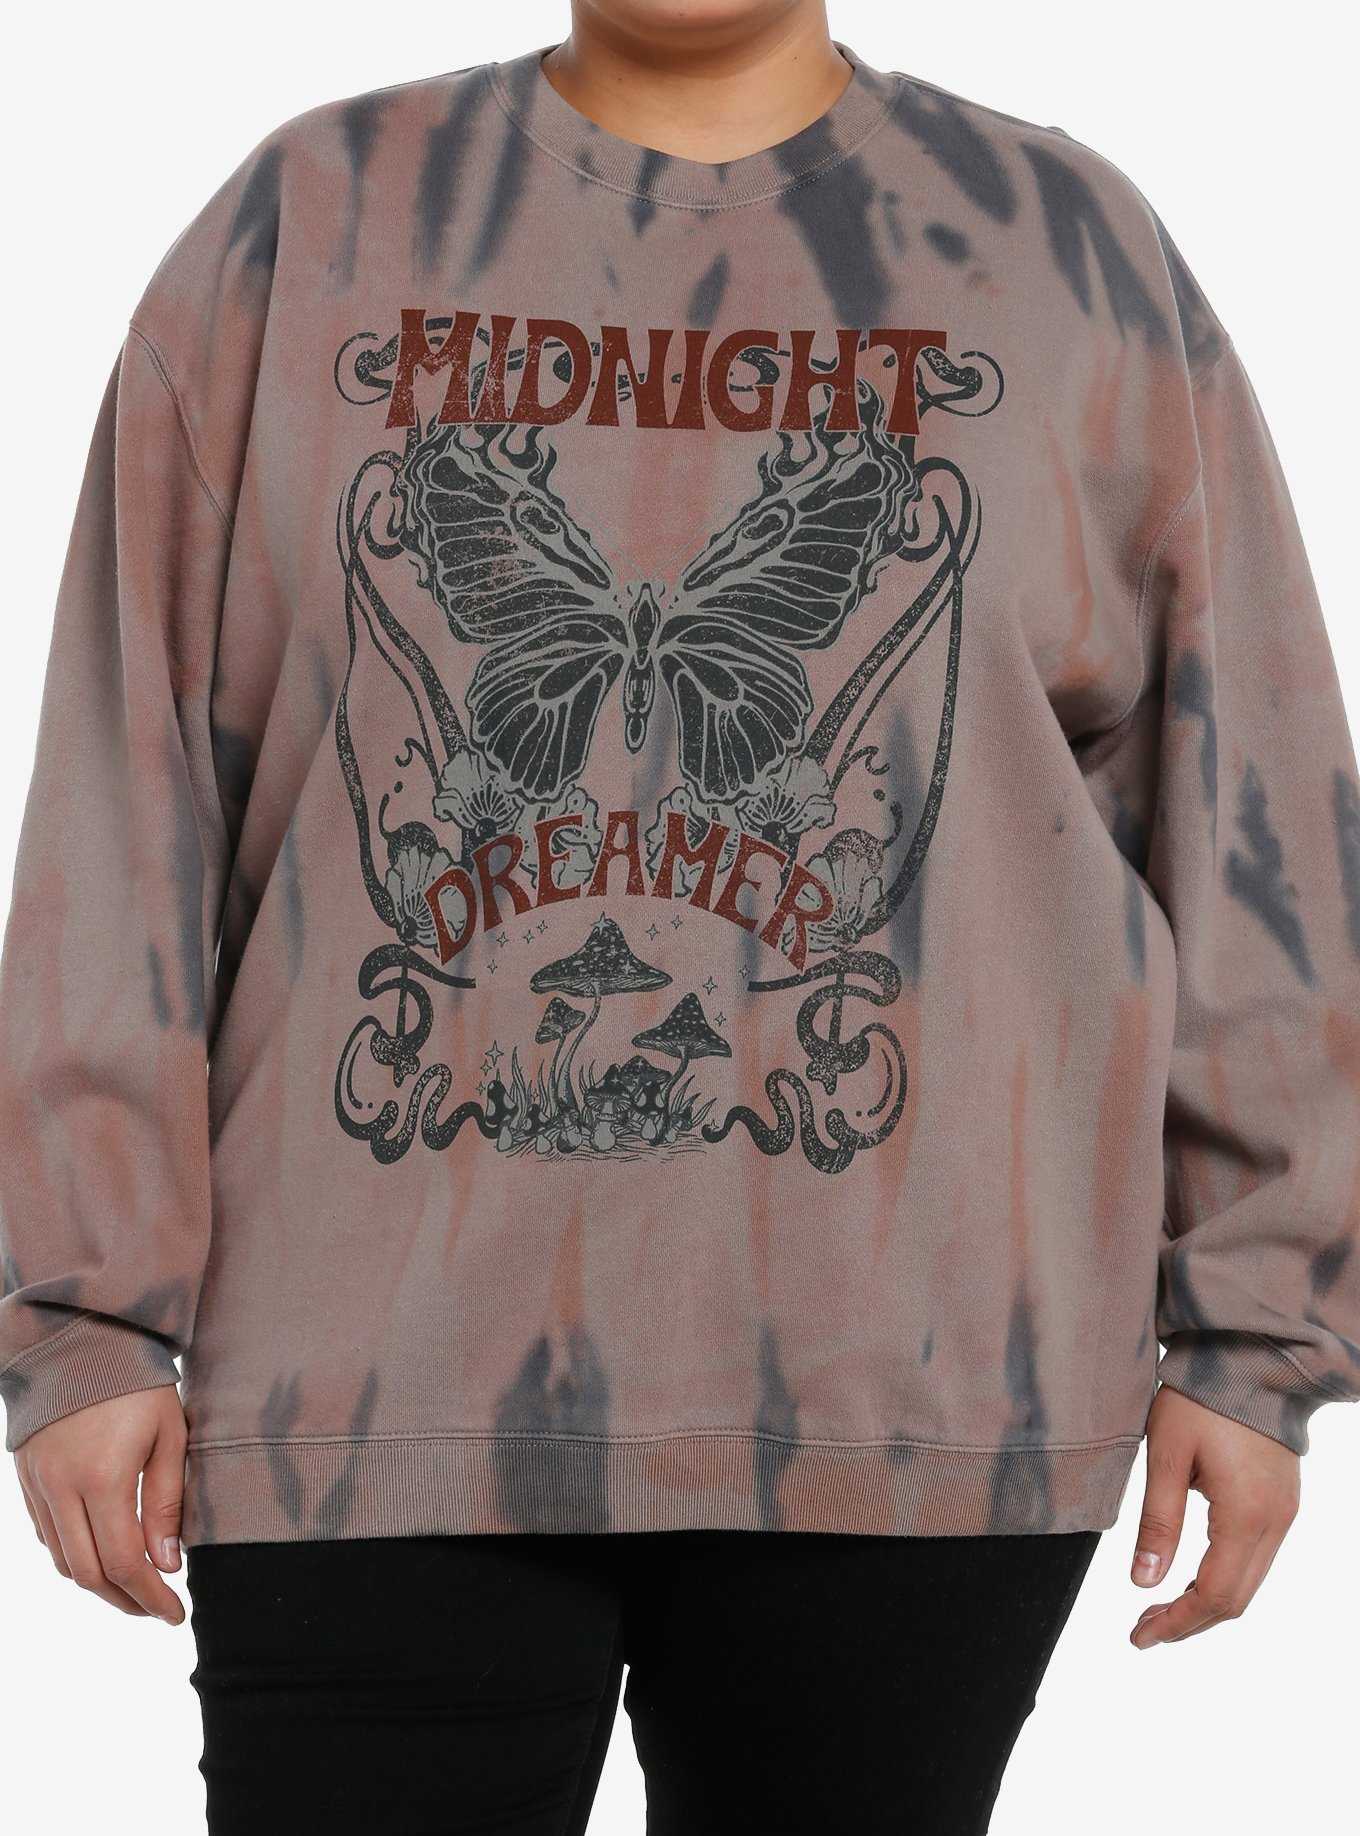 Thorn & Fable Midnight Dreamer Butterfly Tie-Dye Girls Sweatshirt Plus Size, , hi-res